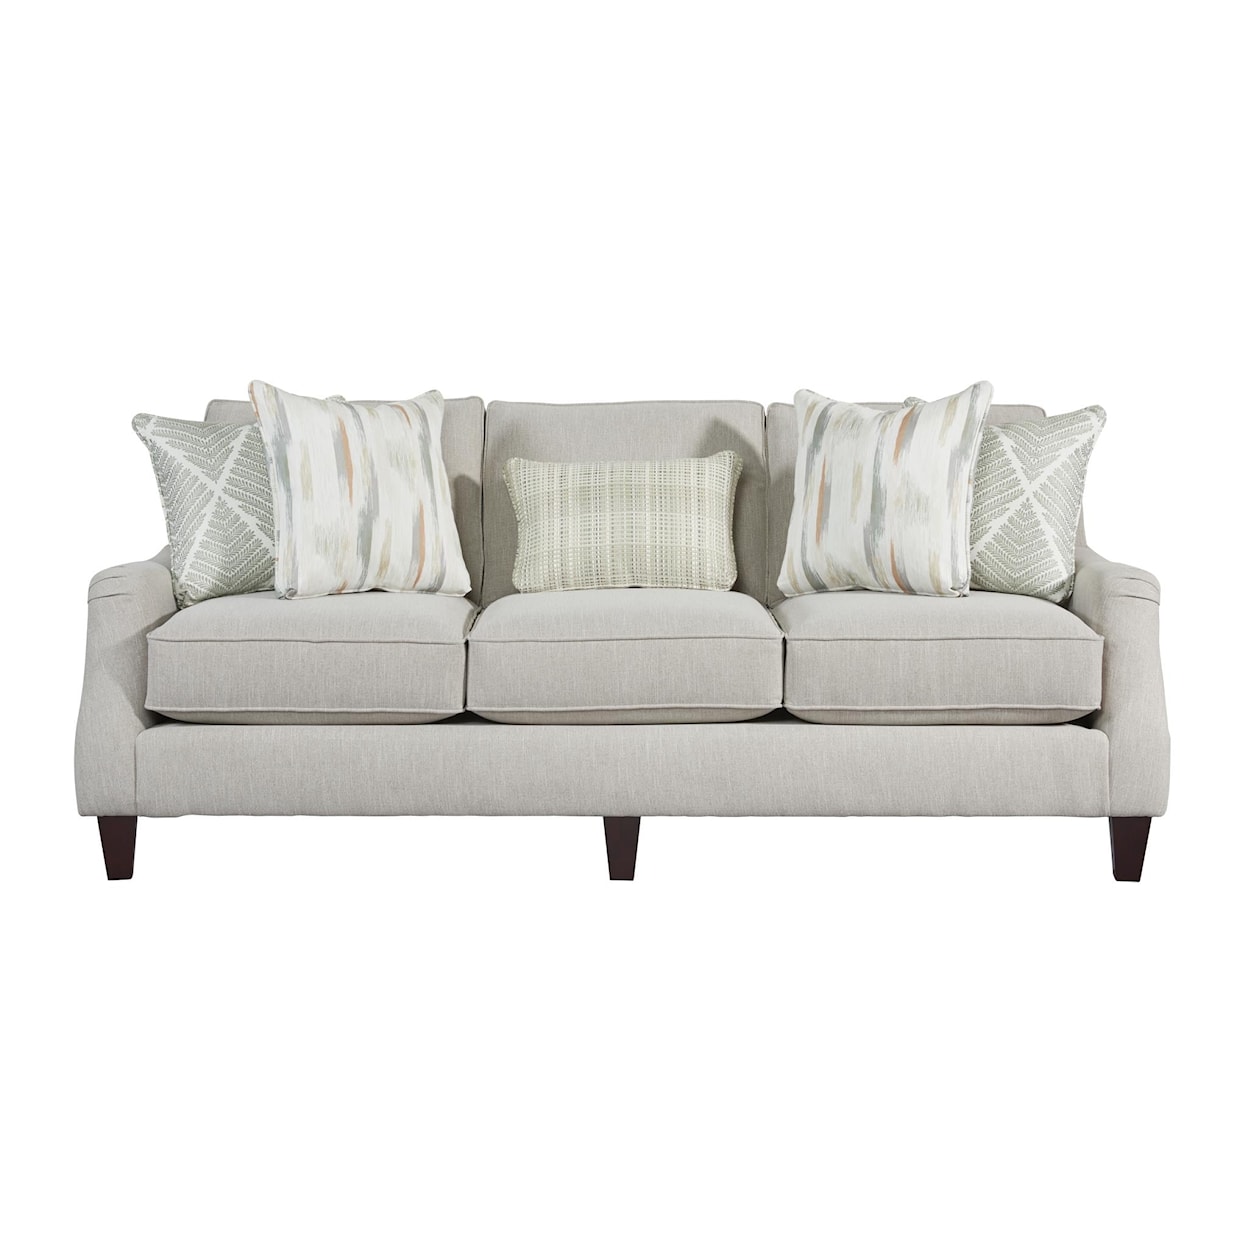 Fusion Furniture 7000 CHARLOTTE CREMINI Sofa